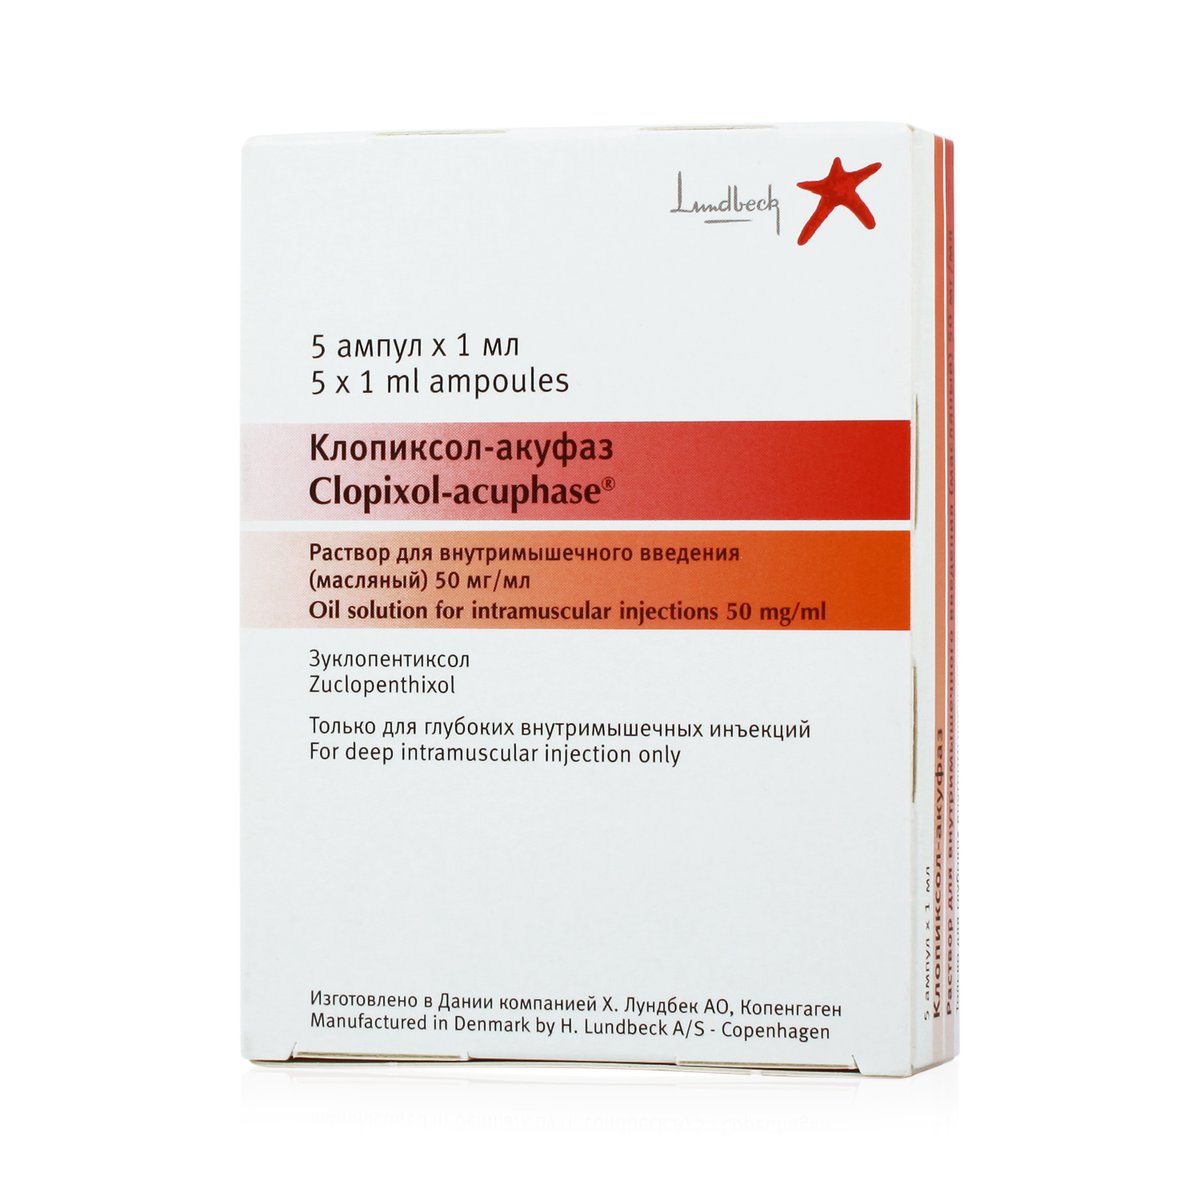 Клопиксол-акуфаз (раствор, 5 шт, 1 мл) - цена,  онлайн  .